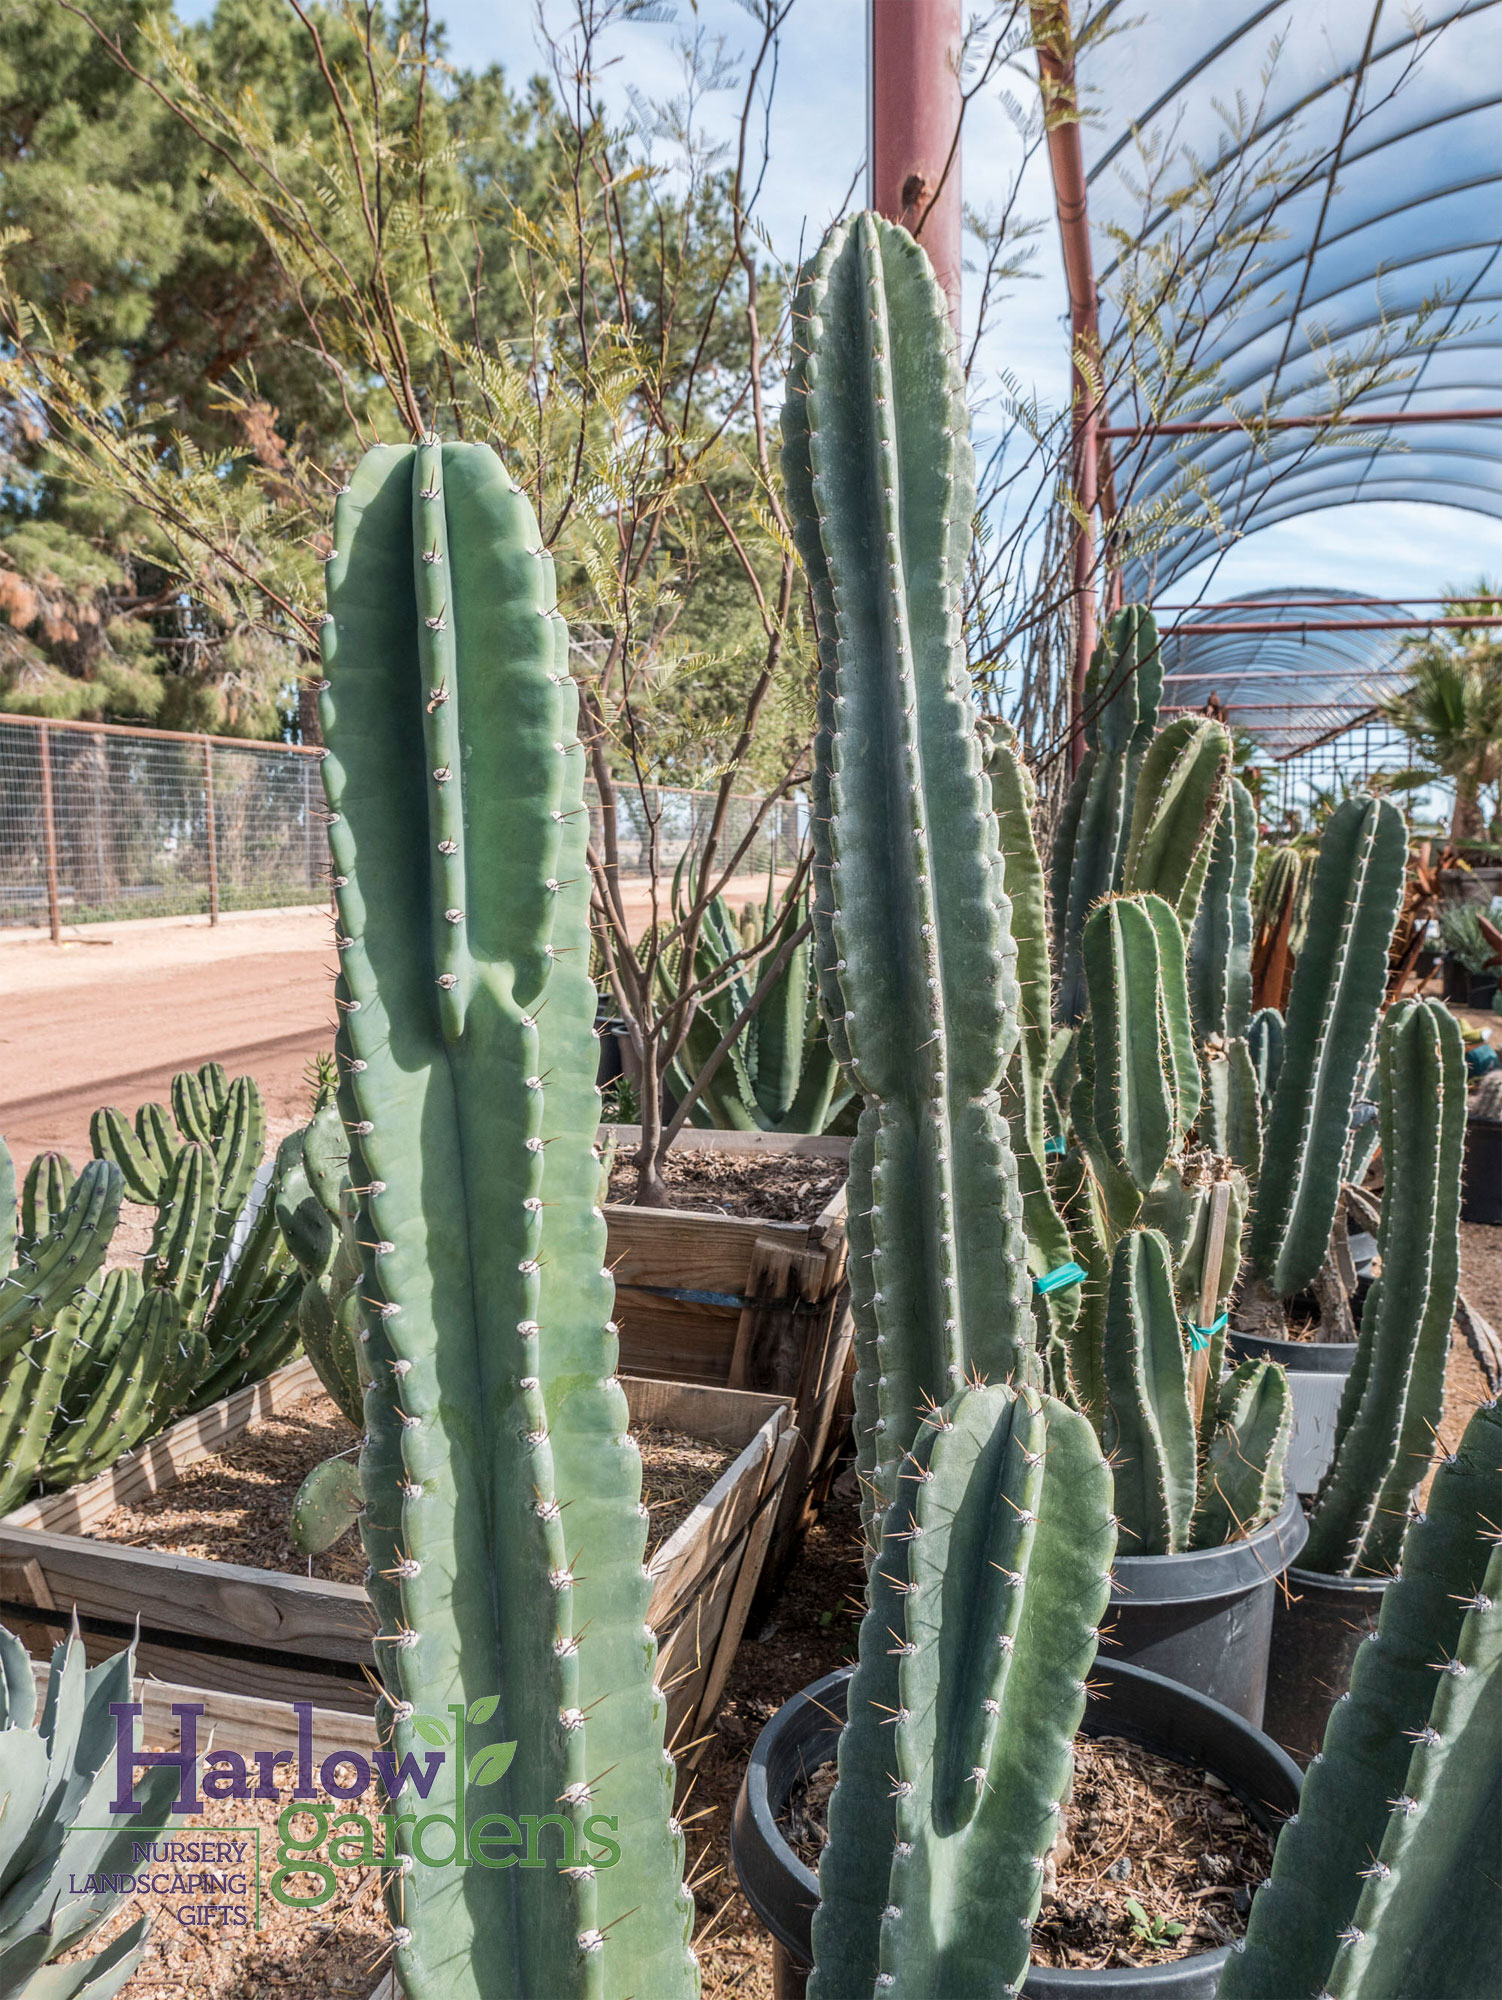 Peruvian Apple Cactus for sale at Harlow Gardens Tucson.